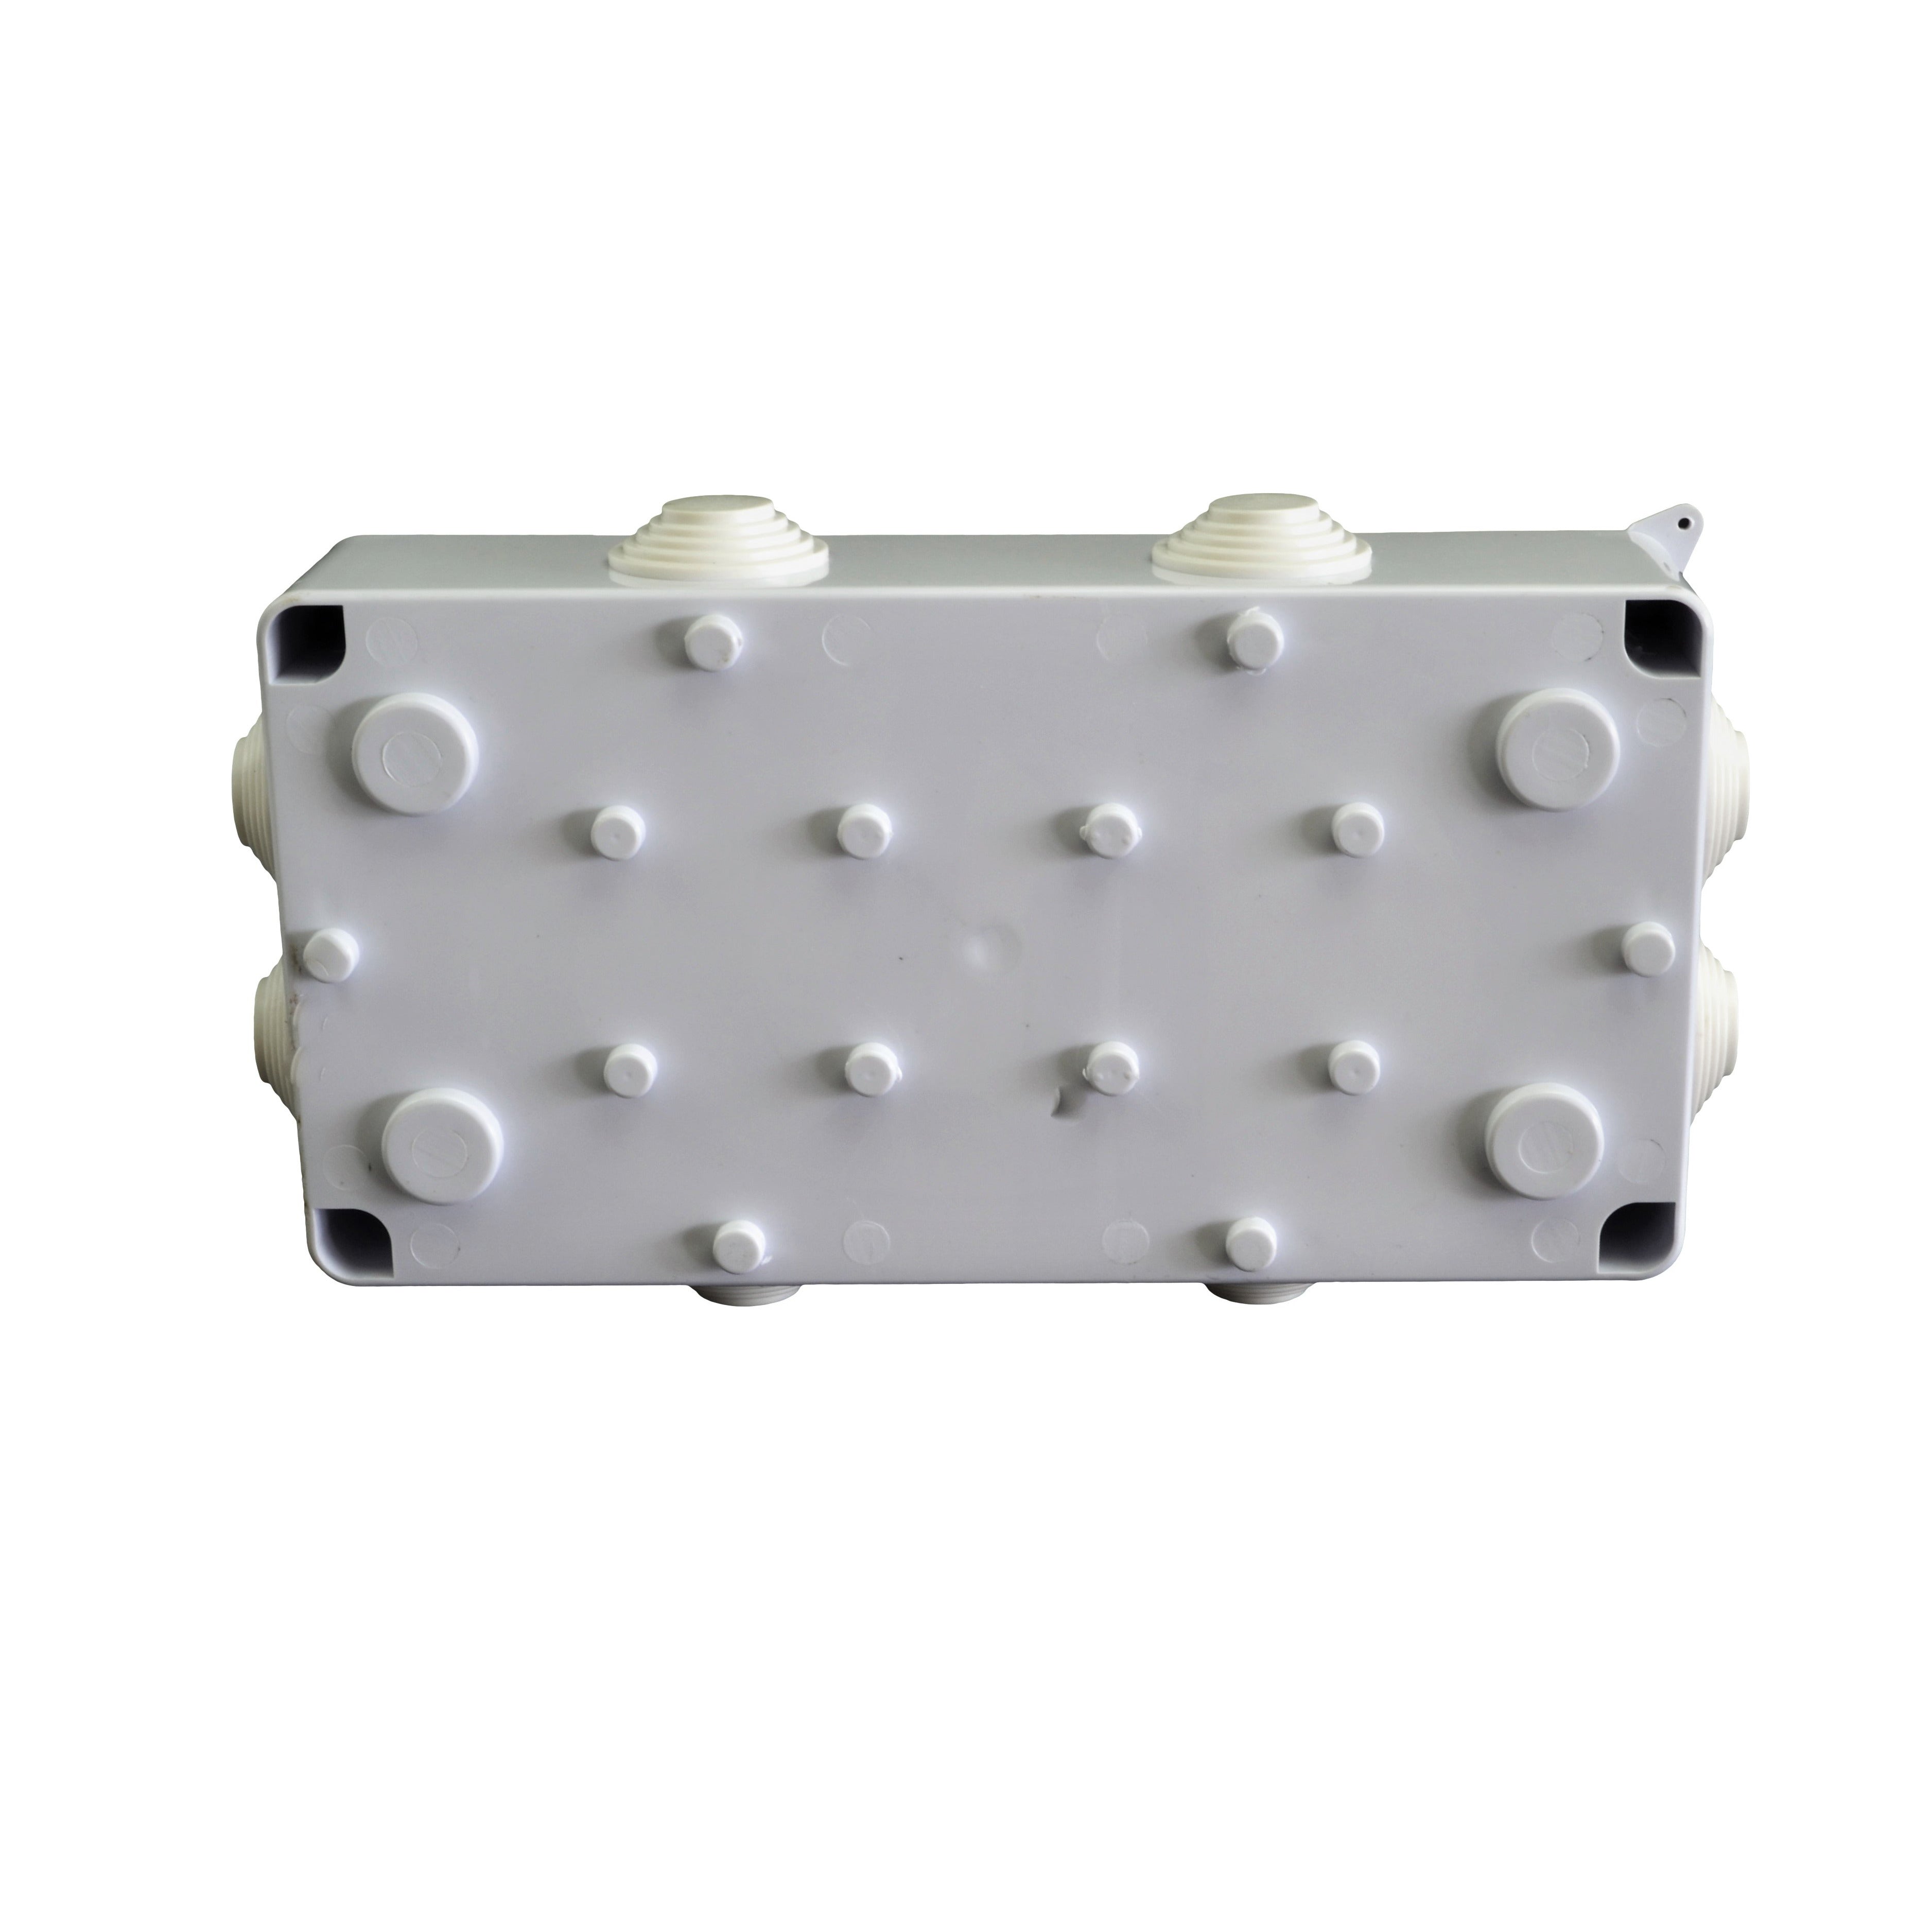 200x100x70 mm ABS Plastic IP65 Waterproof Junction Box